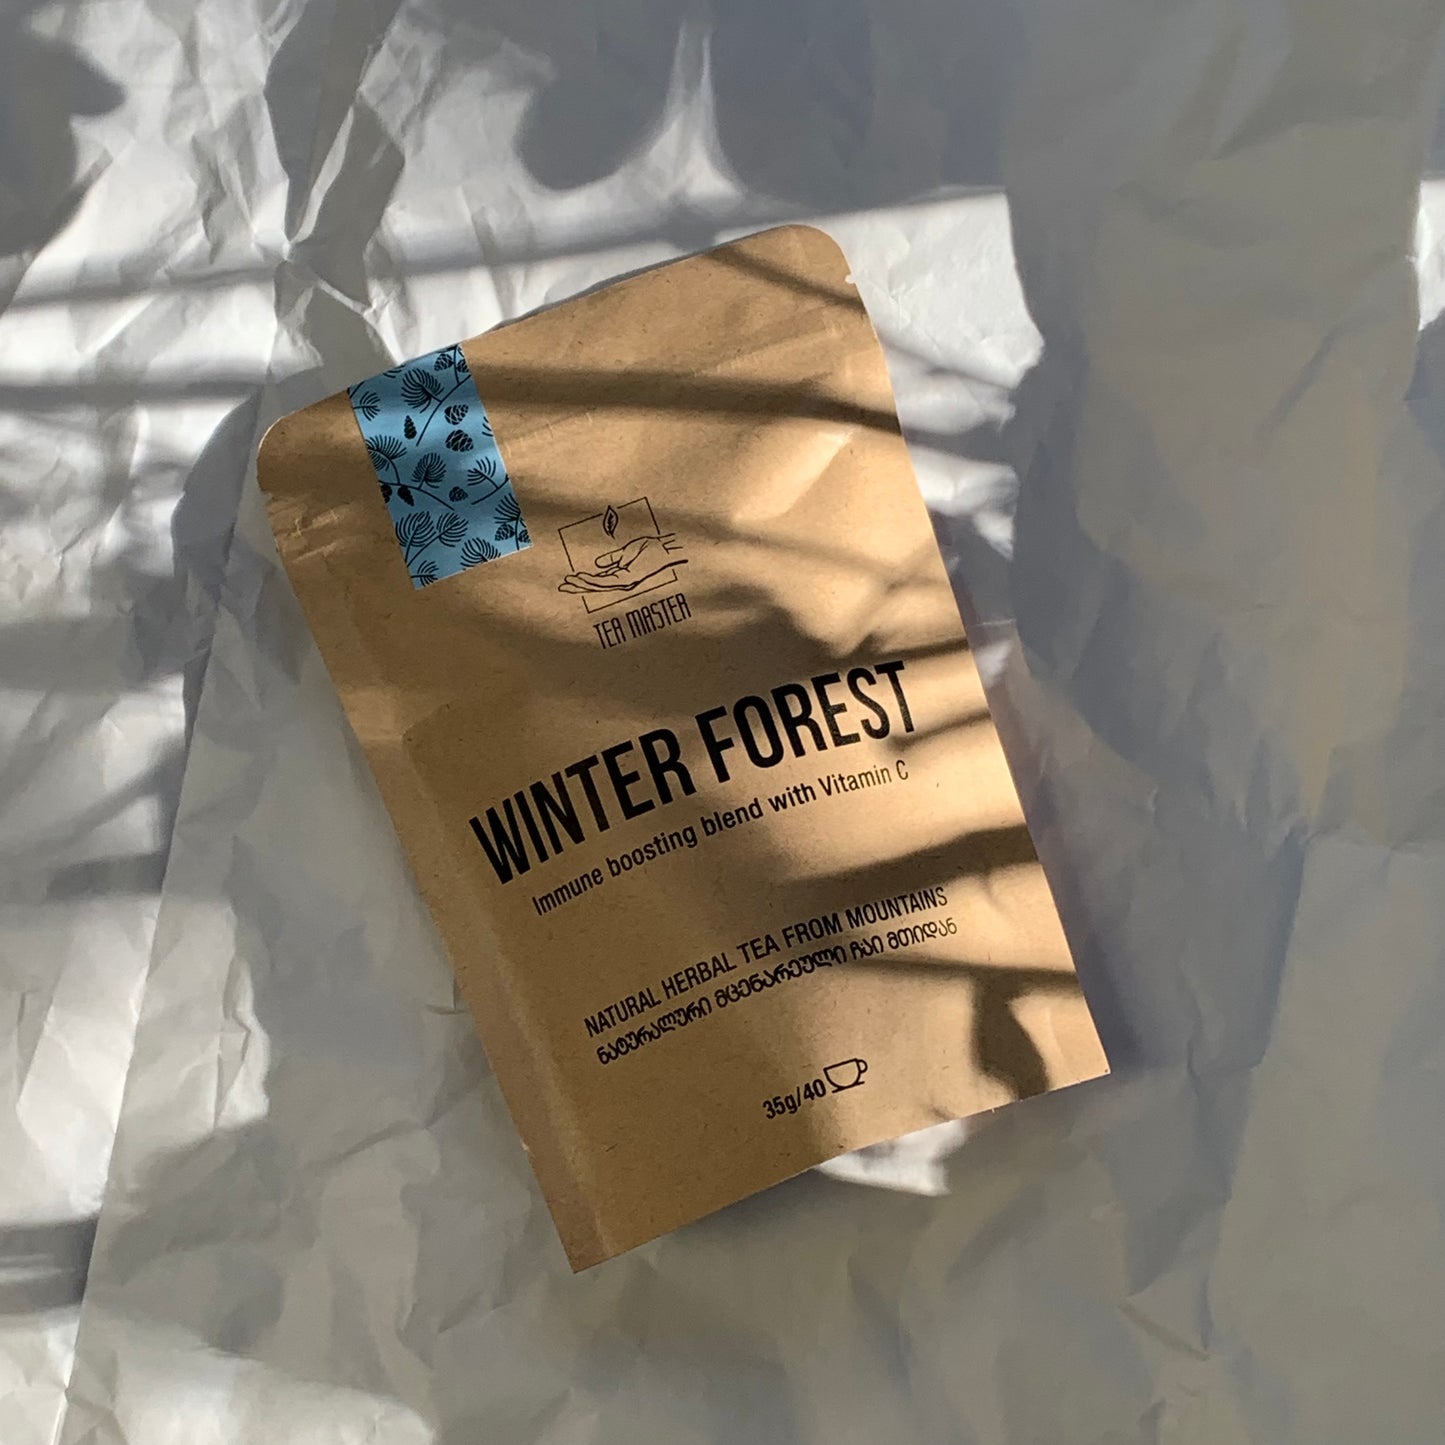 Winter forest. Immune boosting tea blend with Vitamin C | 40 g | Tea Master